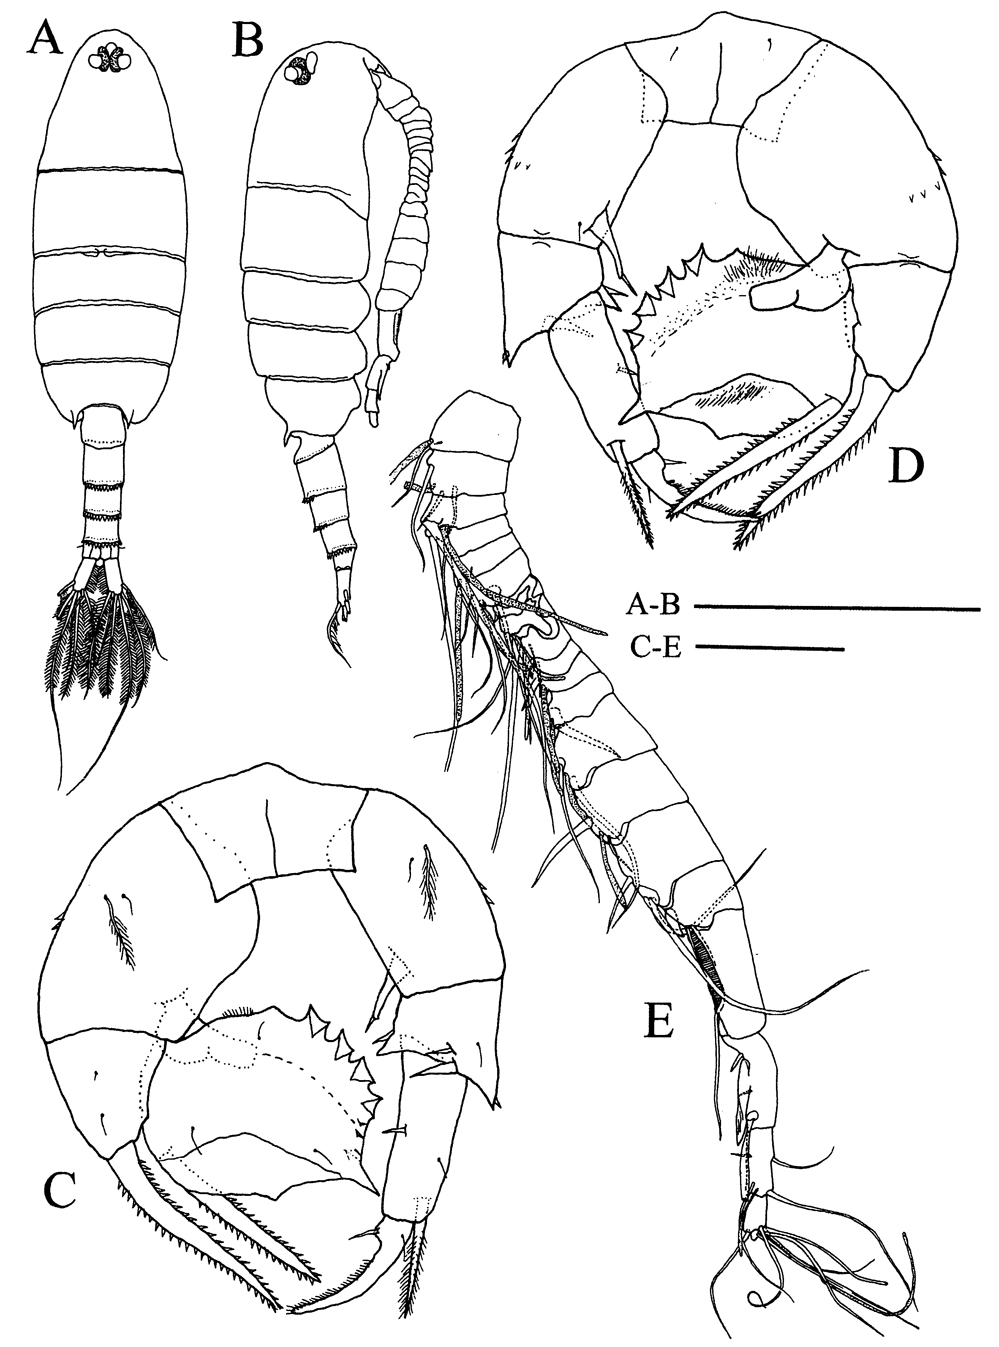 Species Pseudodiaptomus andamanensis - Plate 3 of morphological figures